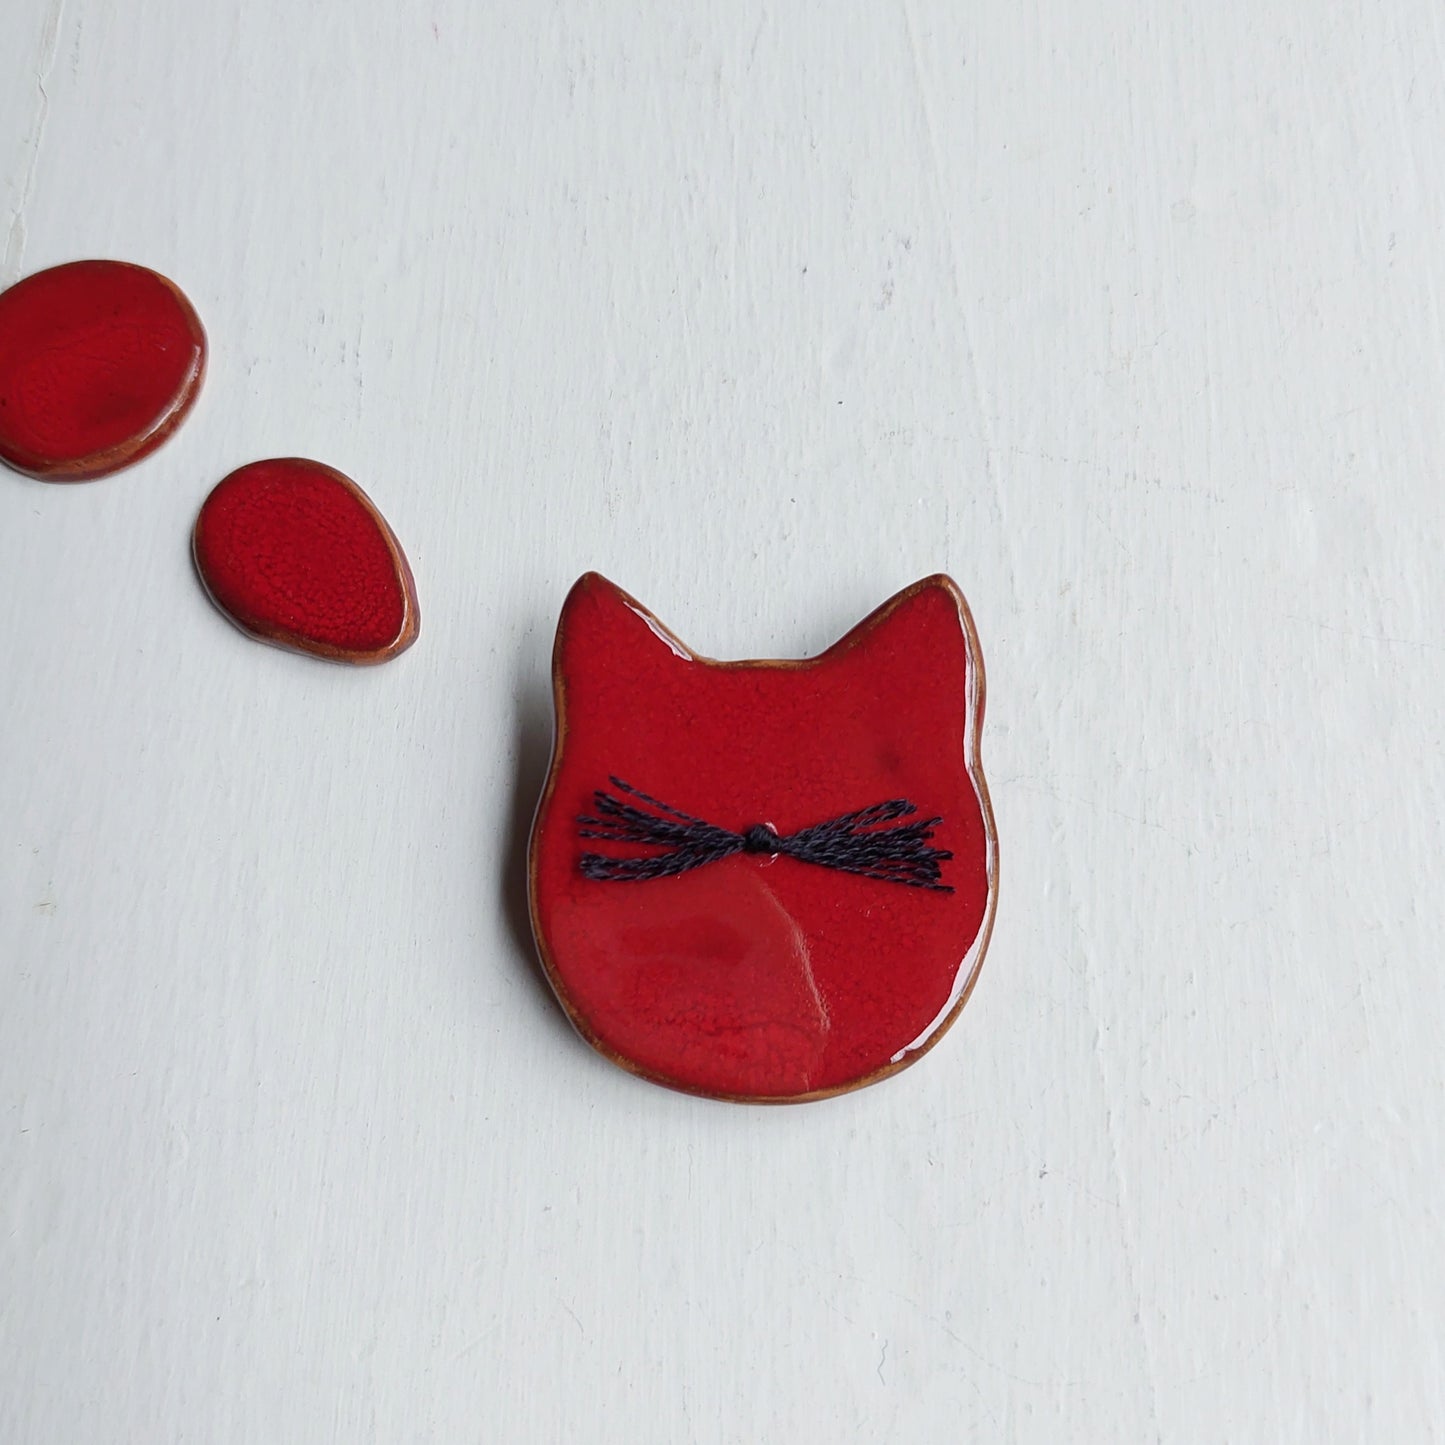 Spille gatti in ceramica rossa, in 3 varianti colore